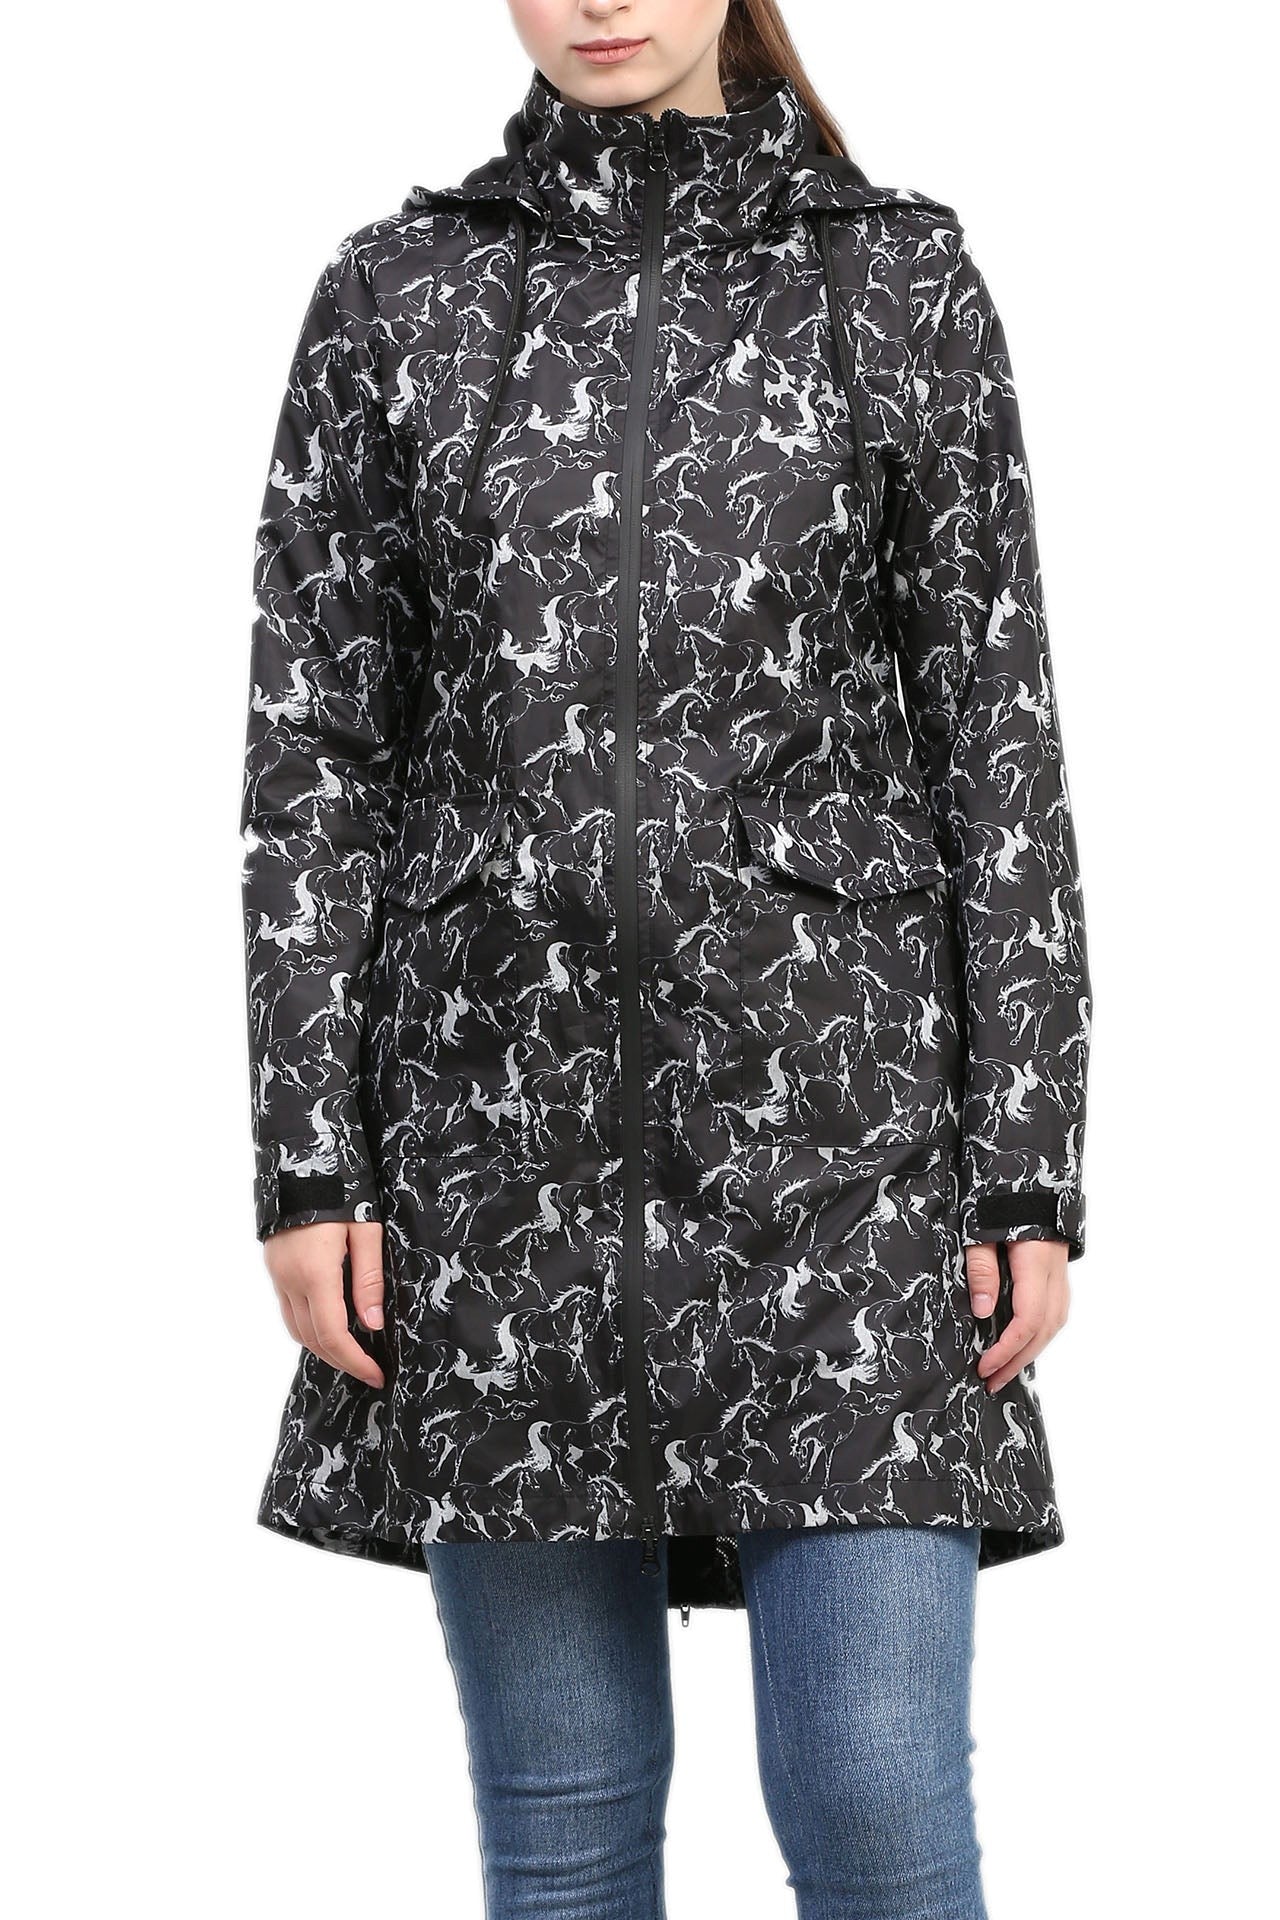 Ladies Linear Horse Rain Full Length Jacket - Black